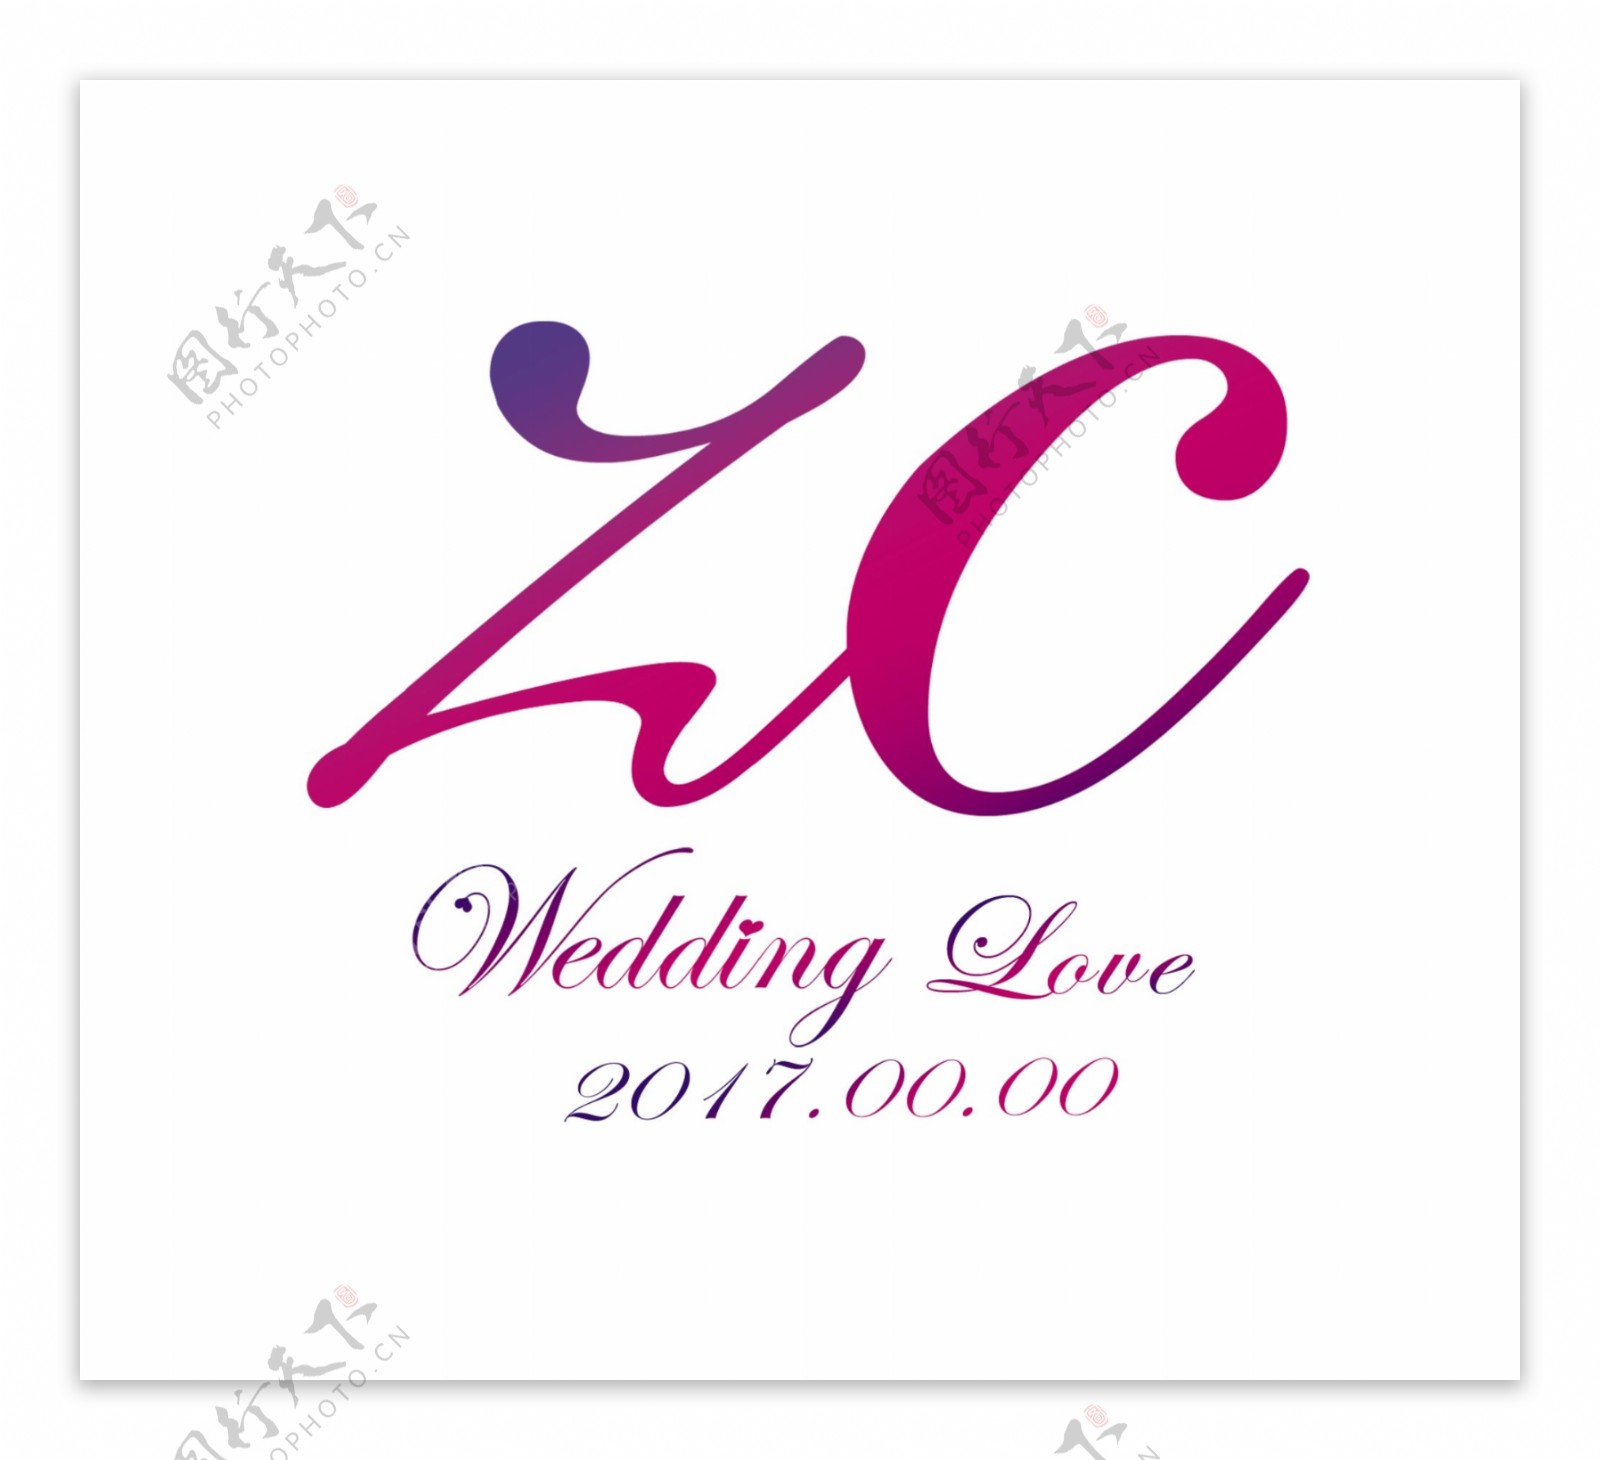 zc婚字母logo设计